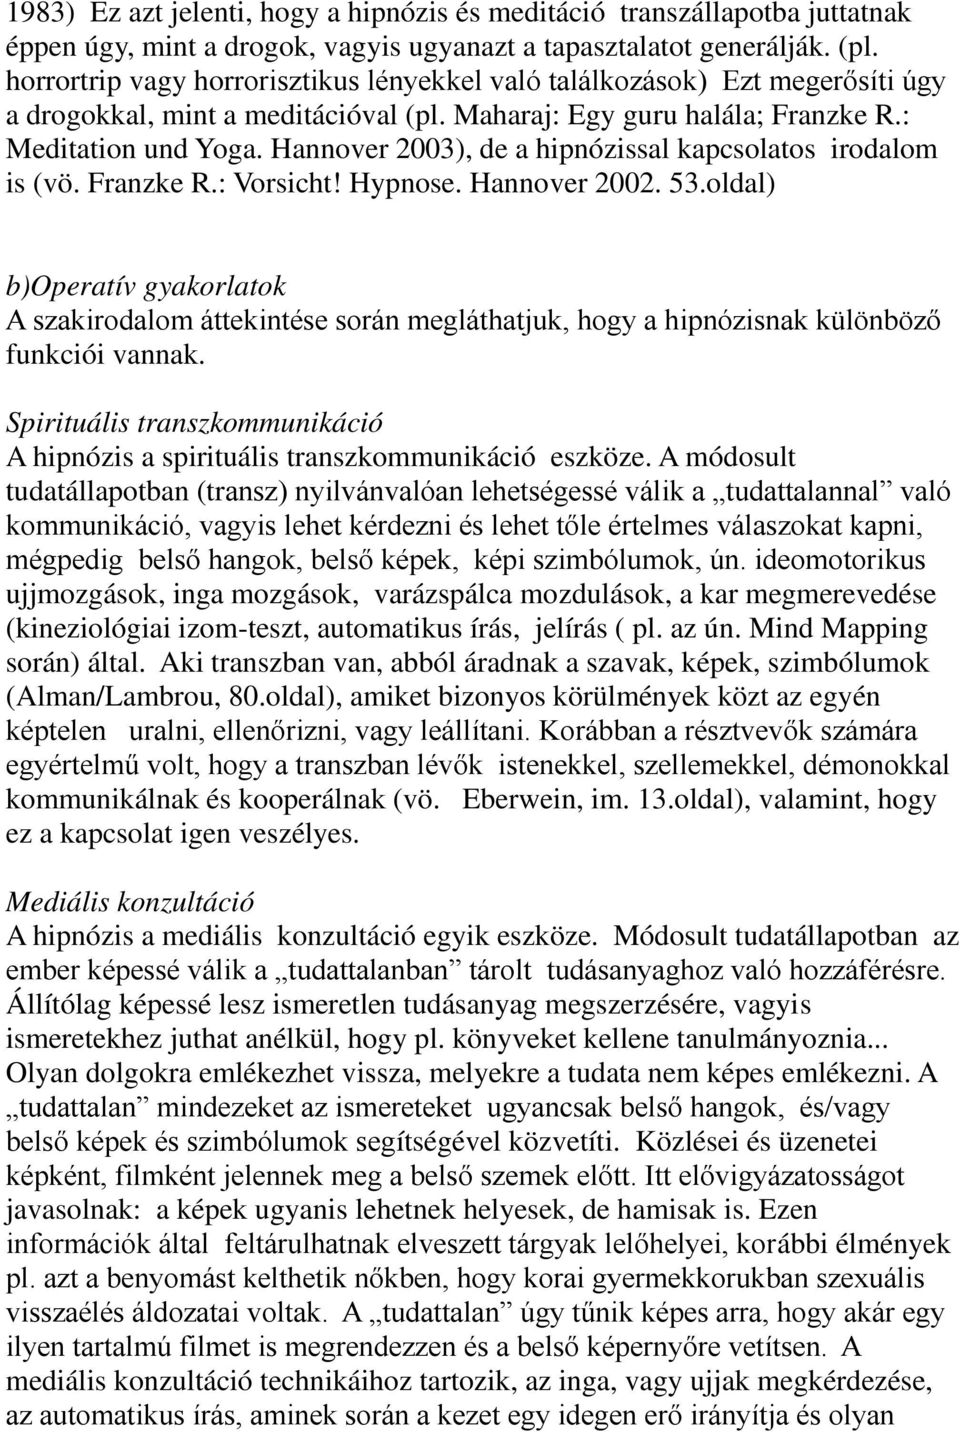 Hannover 2003), de a hipnózissal kapcsolatos irodalom is (vö. Franzke R.: Vorsicht! Hypnose. Hannover 2002. 53.